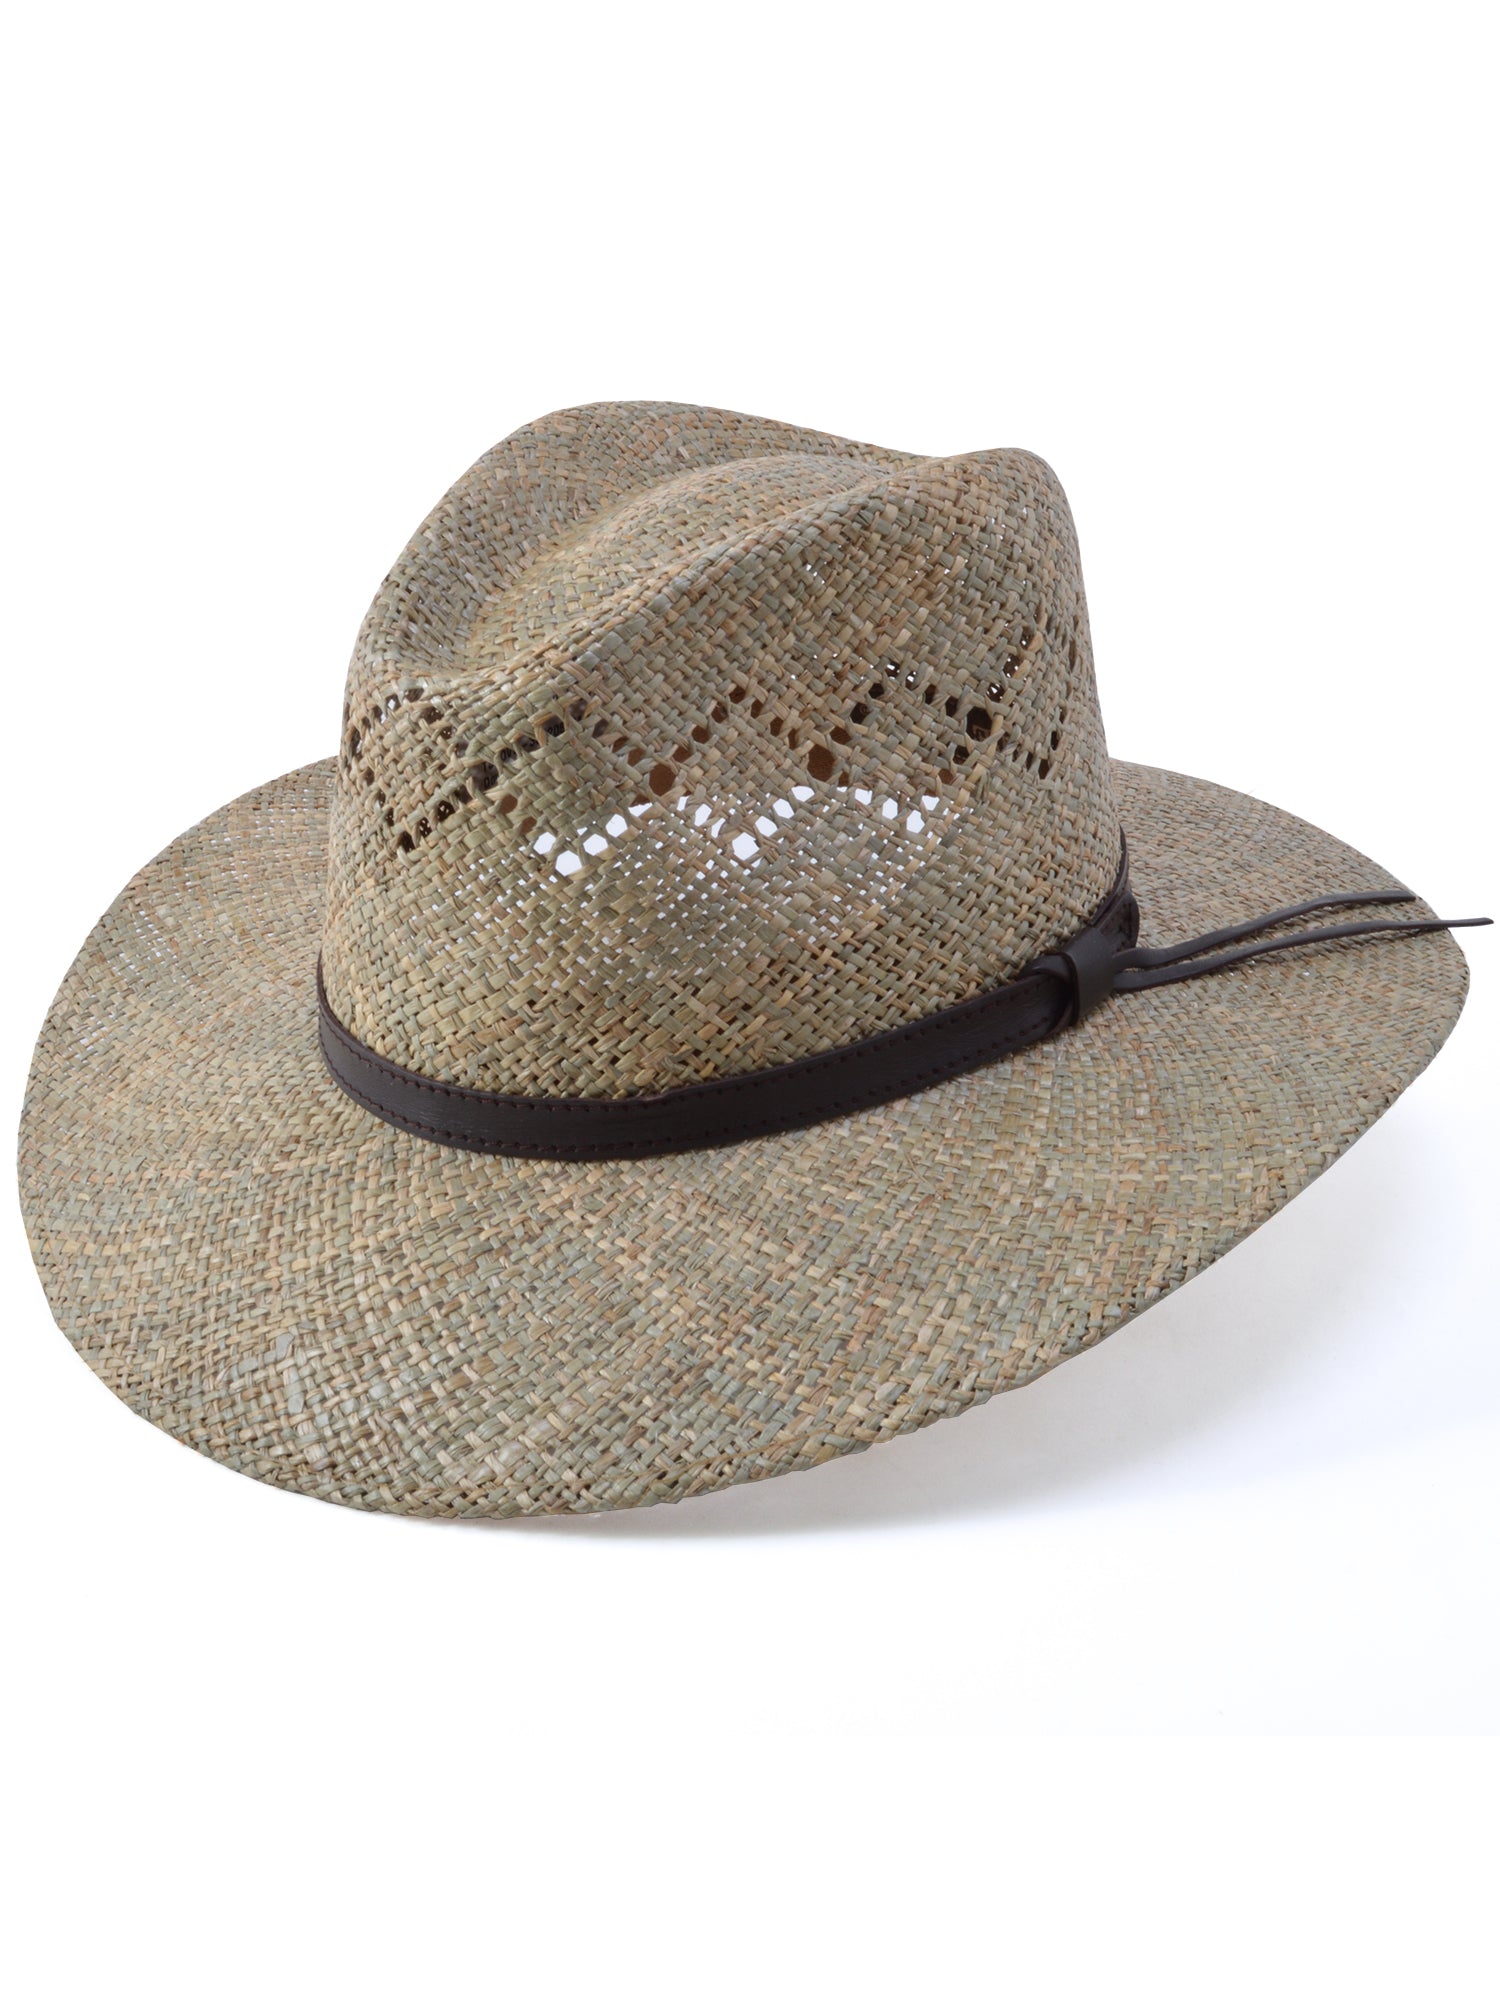 Stetson Dove Mountain 100% Seagrass Straw Hat